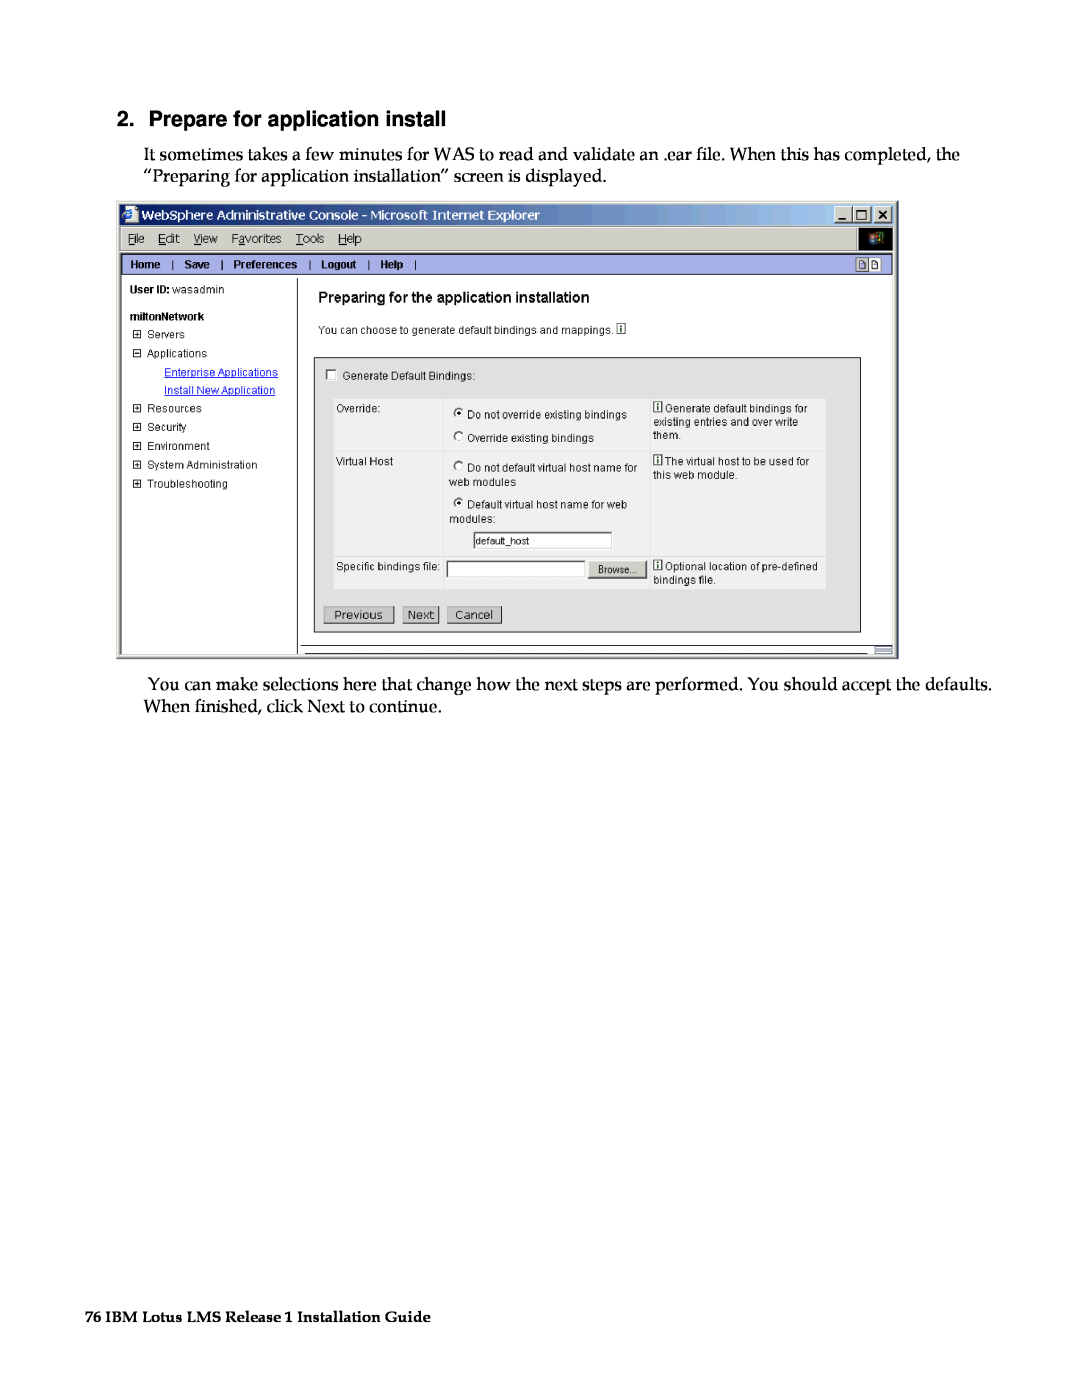 IBM G210-1784-00 manual Prepare for application install, IBM Lotus LMS Release 1 Installation Guide 